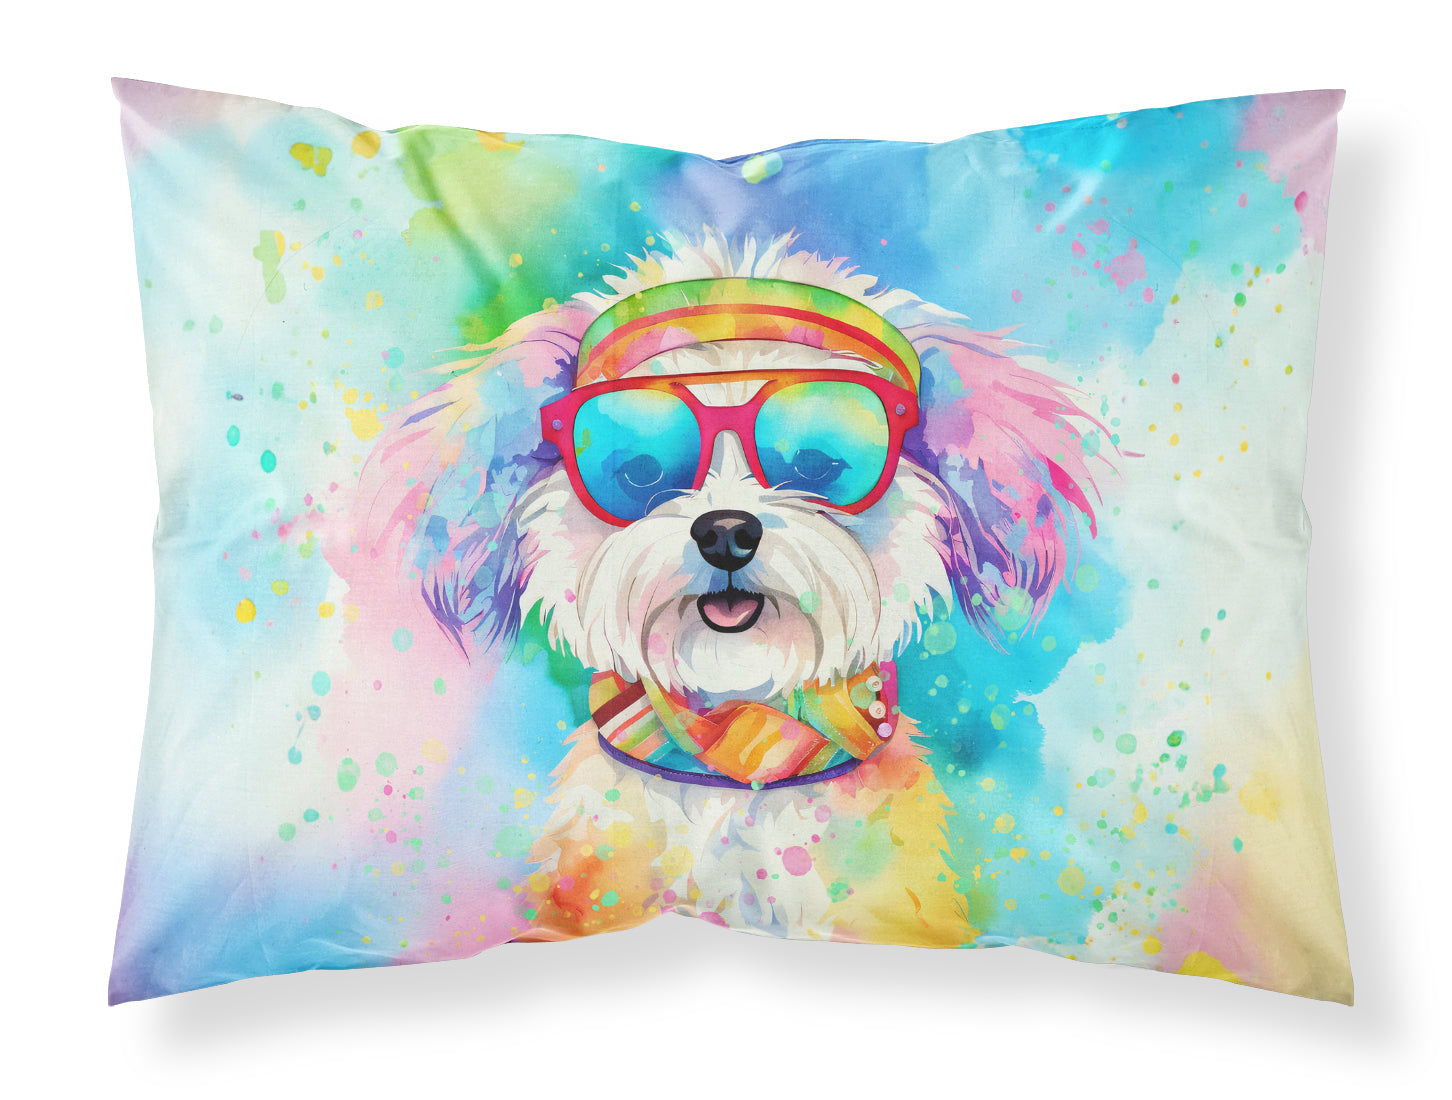 Buy this Bichon Frise Hippie Dawg Standard Pillowcase